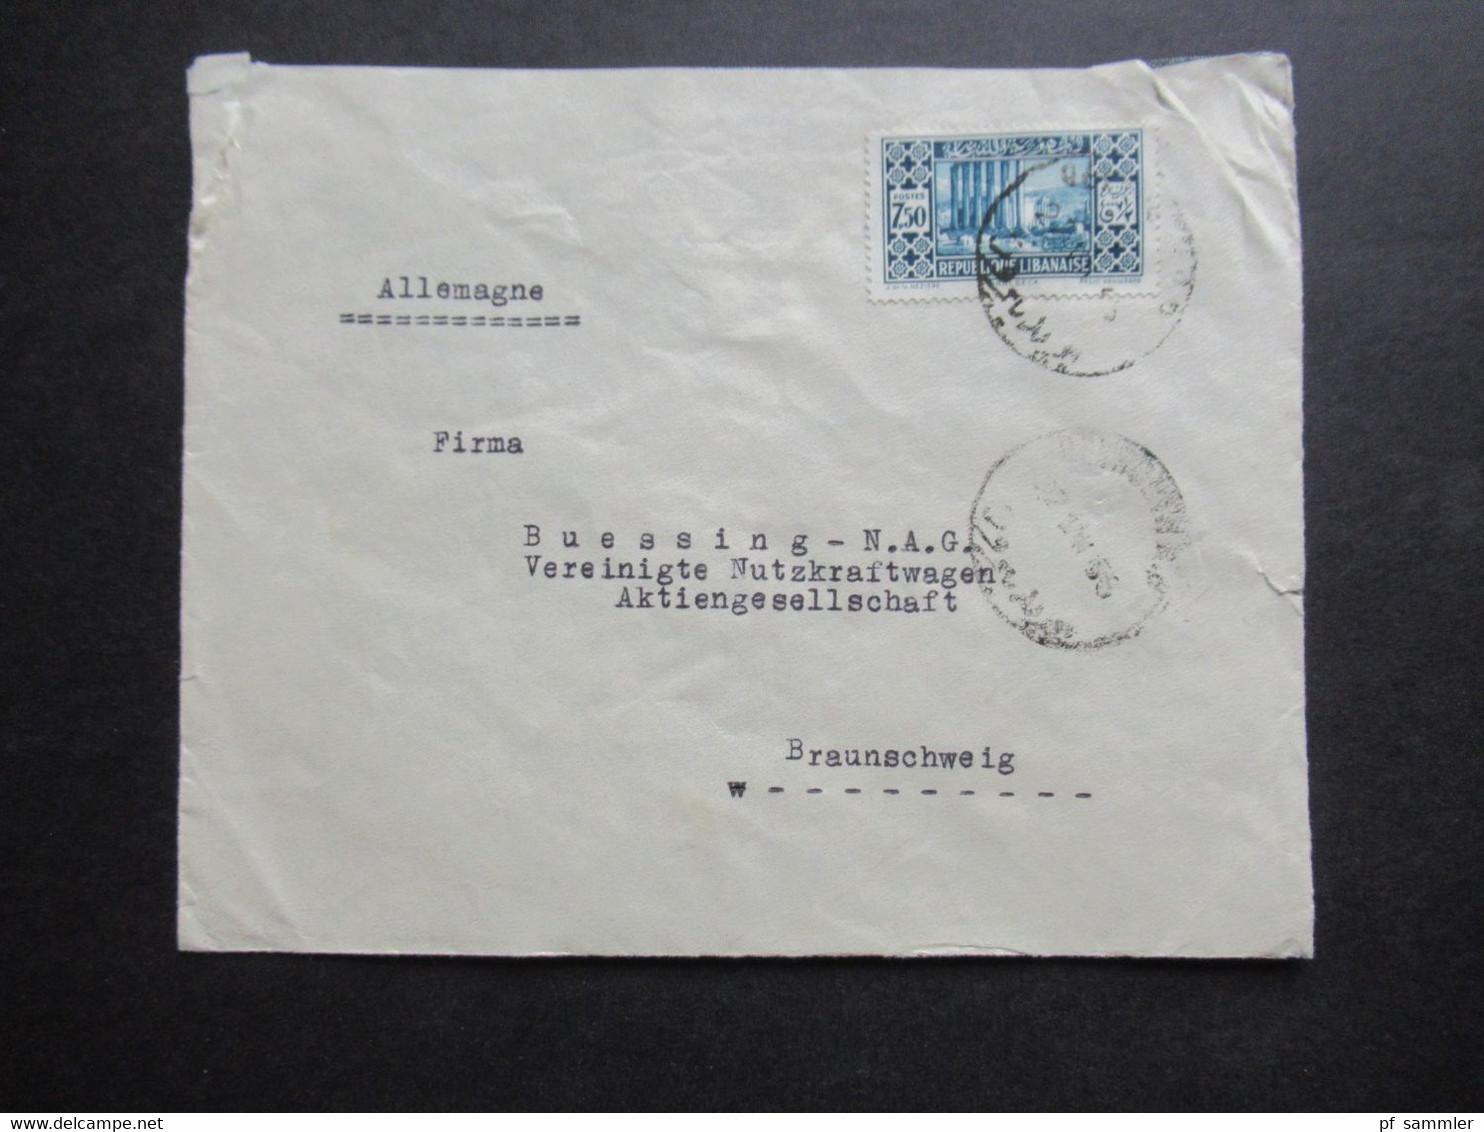 Republique Libanaise 1935 Libanon Umschlag Fankhaenel & Kronofol Beyrouth (Syrie) Aufkleber Soennecken Weltmarke - Libano